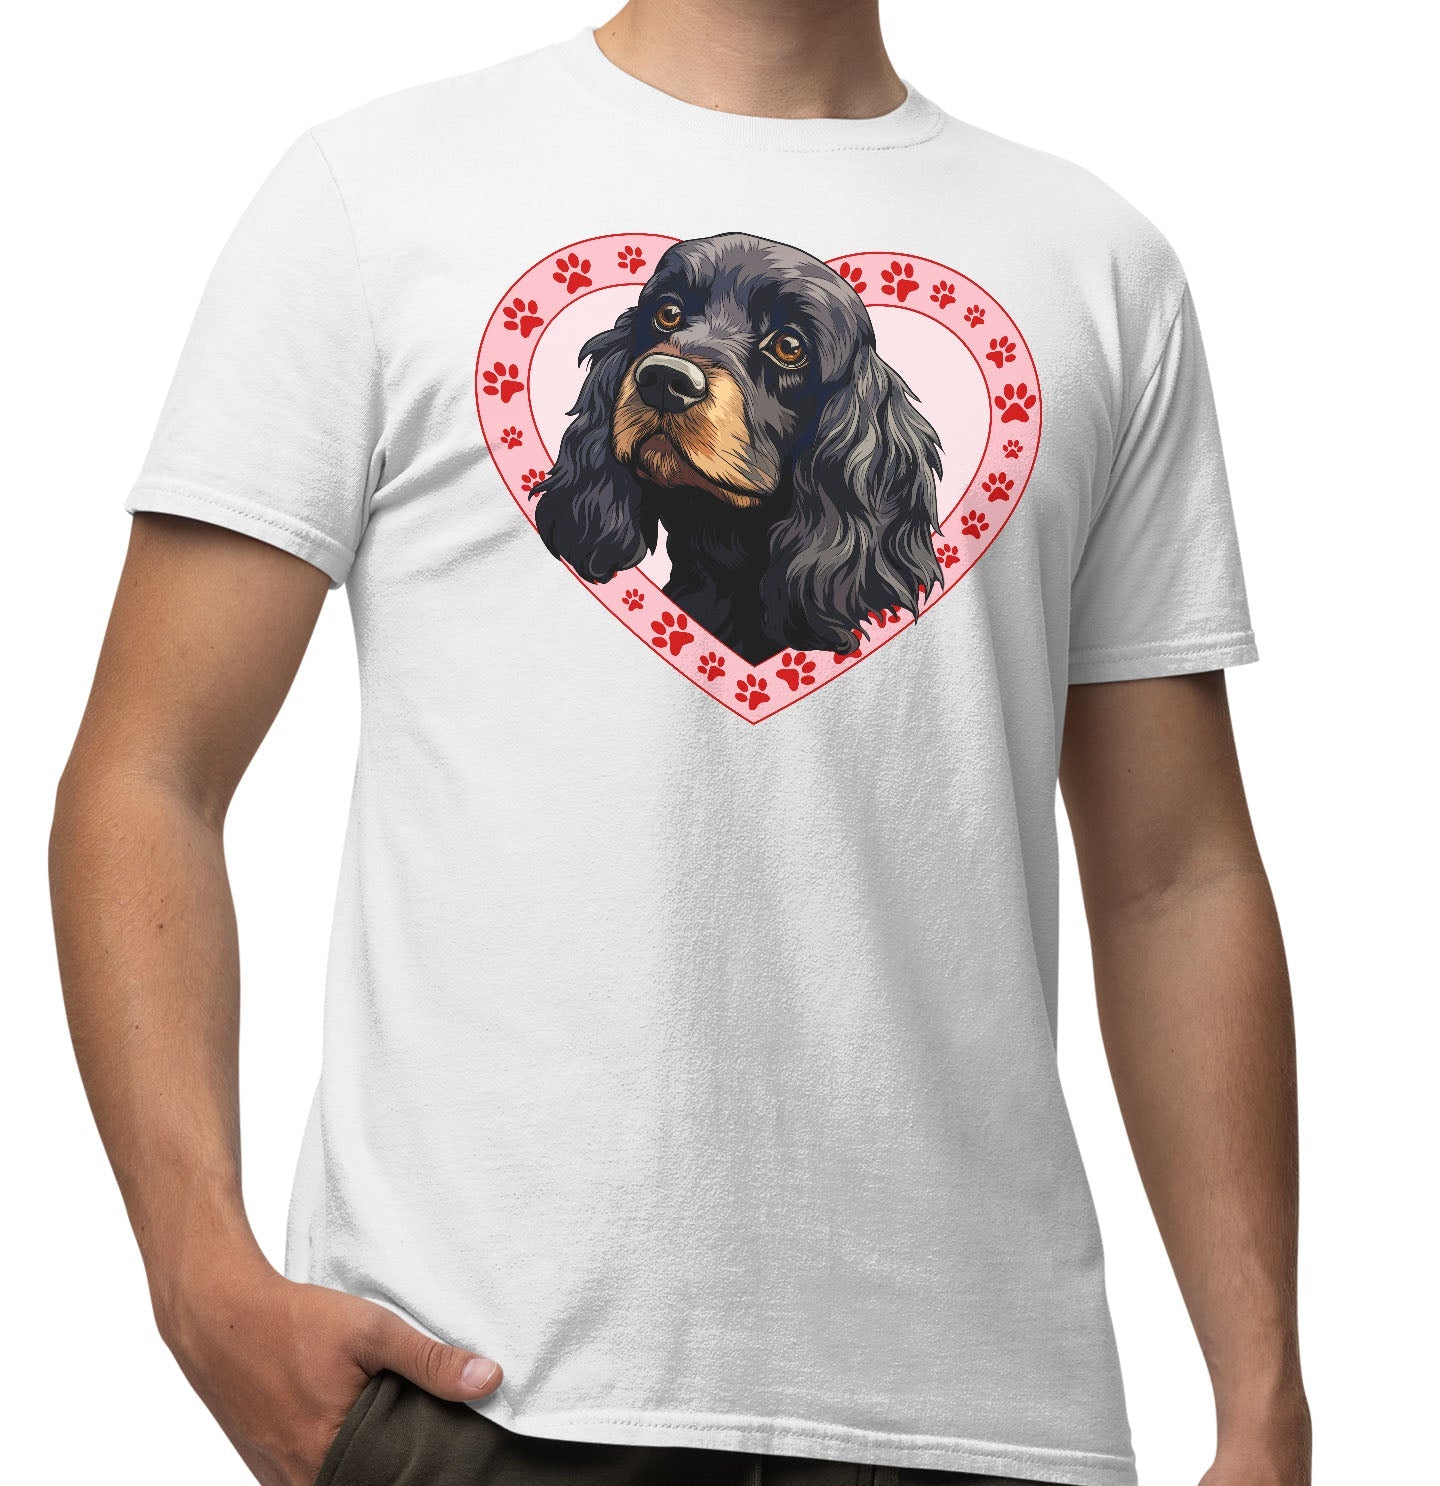 Cocker Spaniel (Black & Tan) Illustration In Heart - Adult Unisex T-Shirt